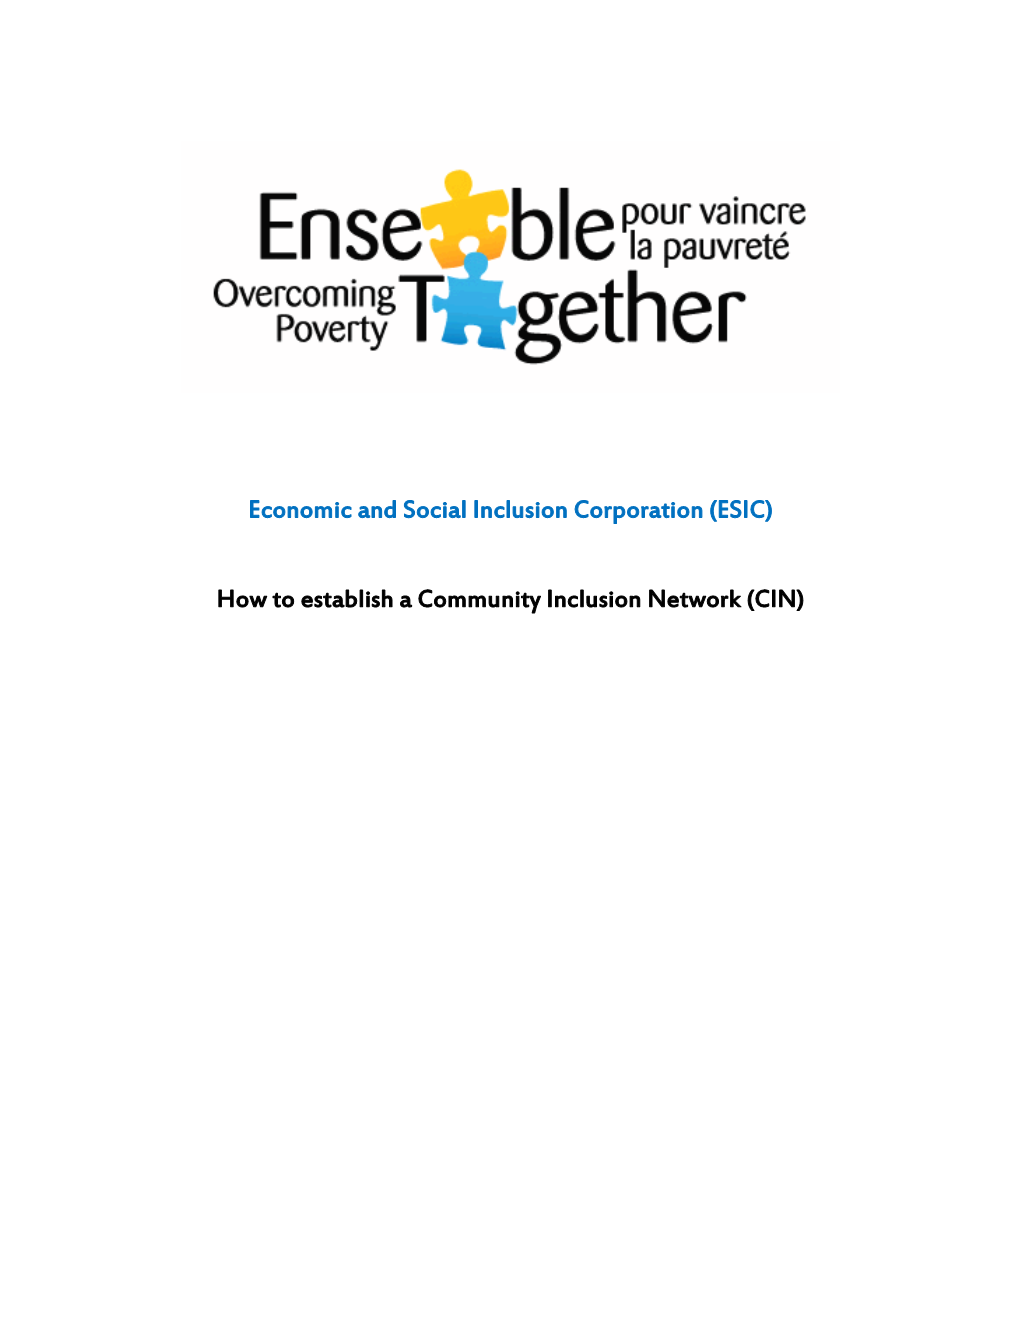 ESIC) How to Establish a Community Inclusion Network (CIN